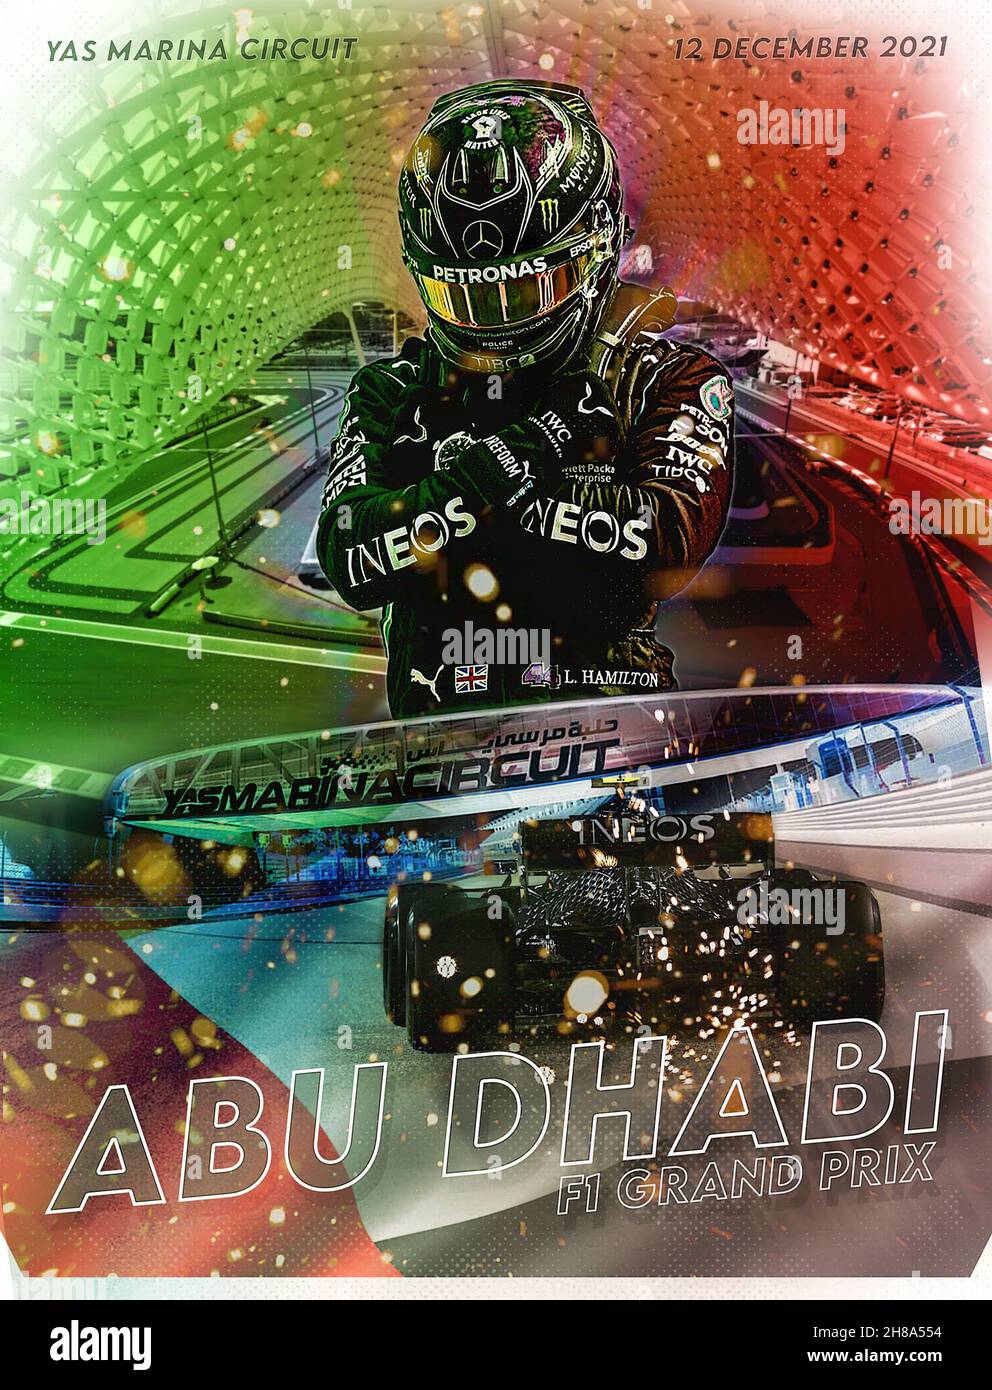 Abu Dhabi F1 Grand Prix Race Weekend Poster Stock Photo - Alamy